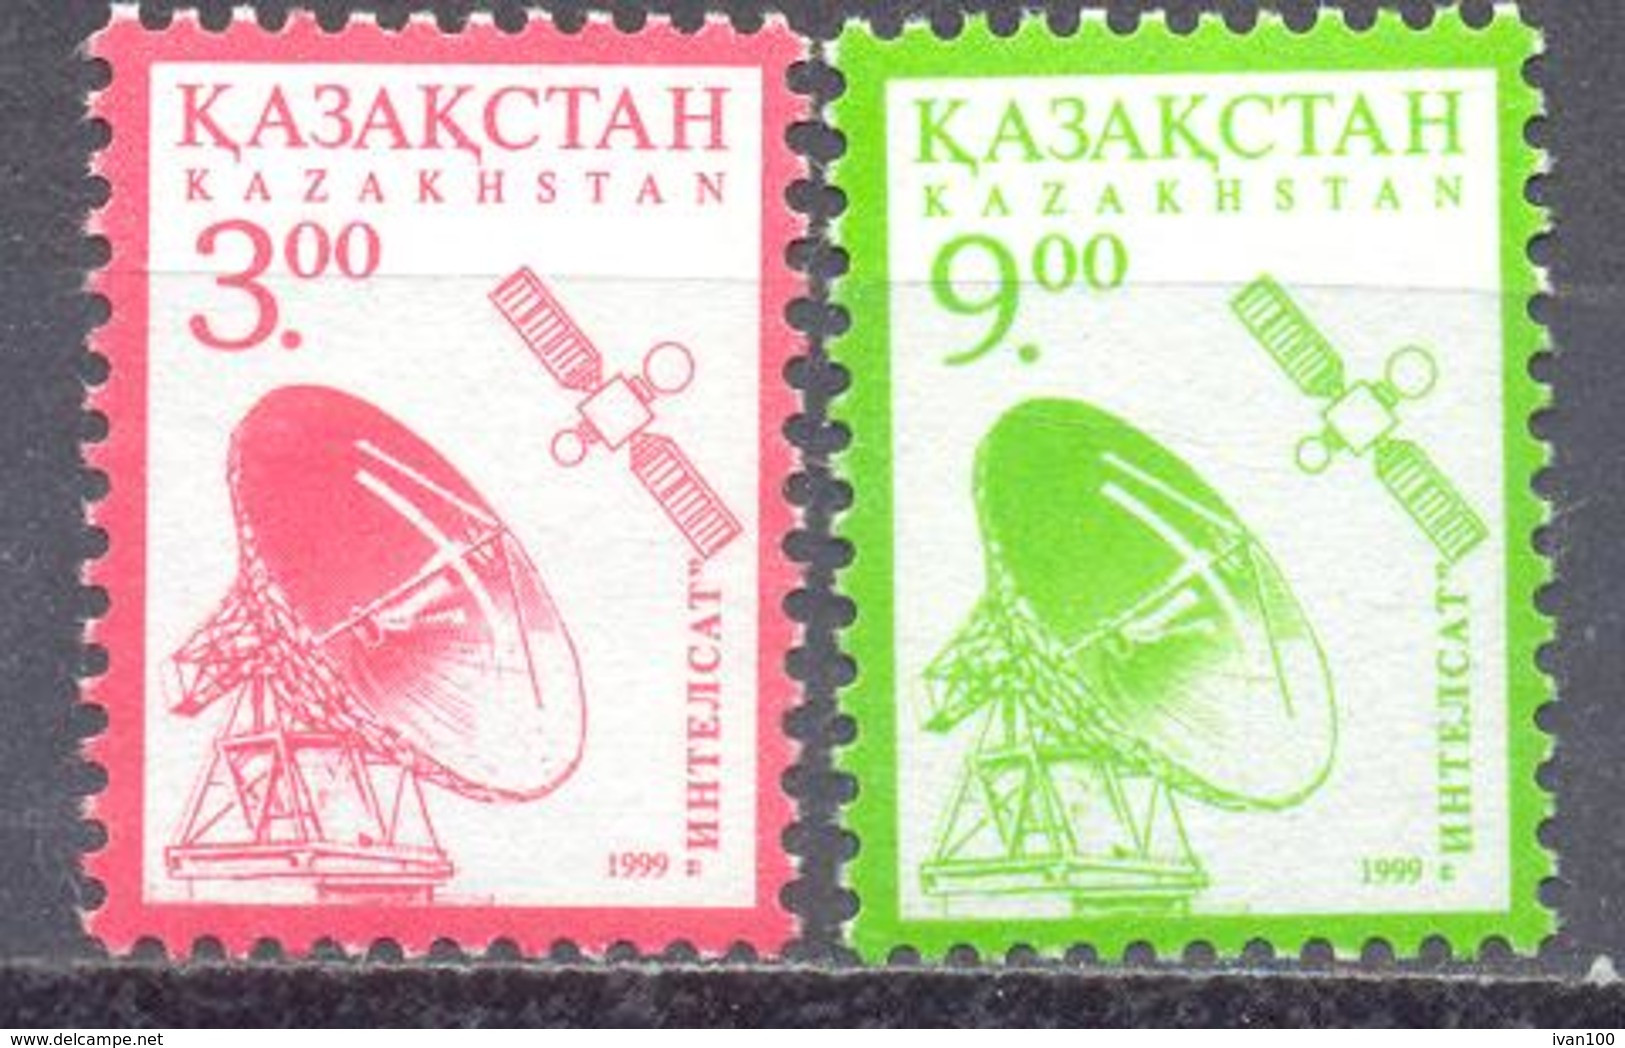 1999. Kazakhstan, Space, Satellites "Intelsat" Communication, 3.00 & 9.00, 2v,  Mint/** - Kazakhstan